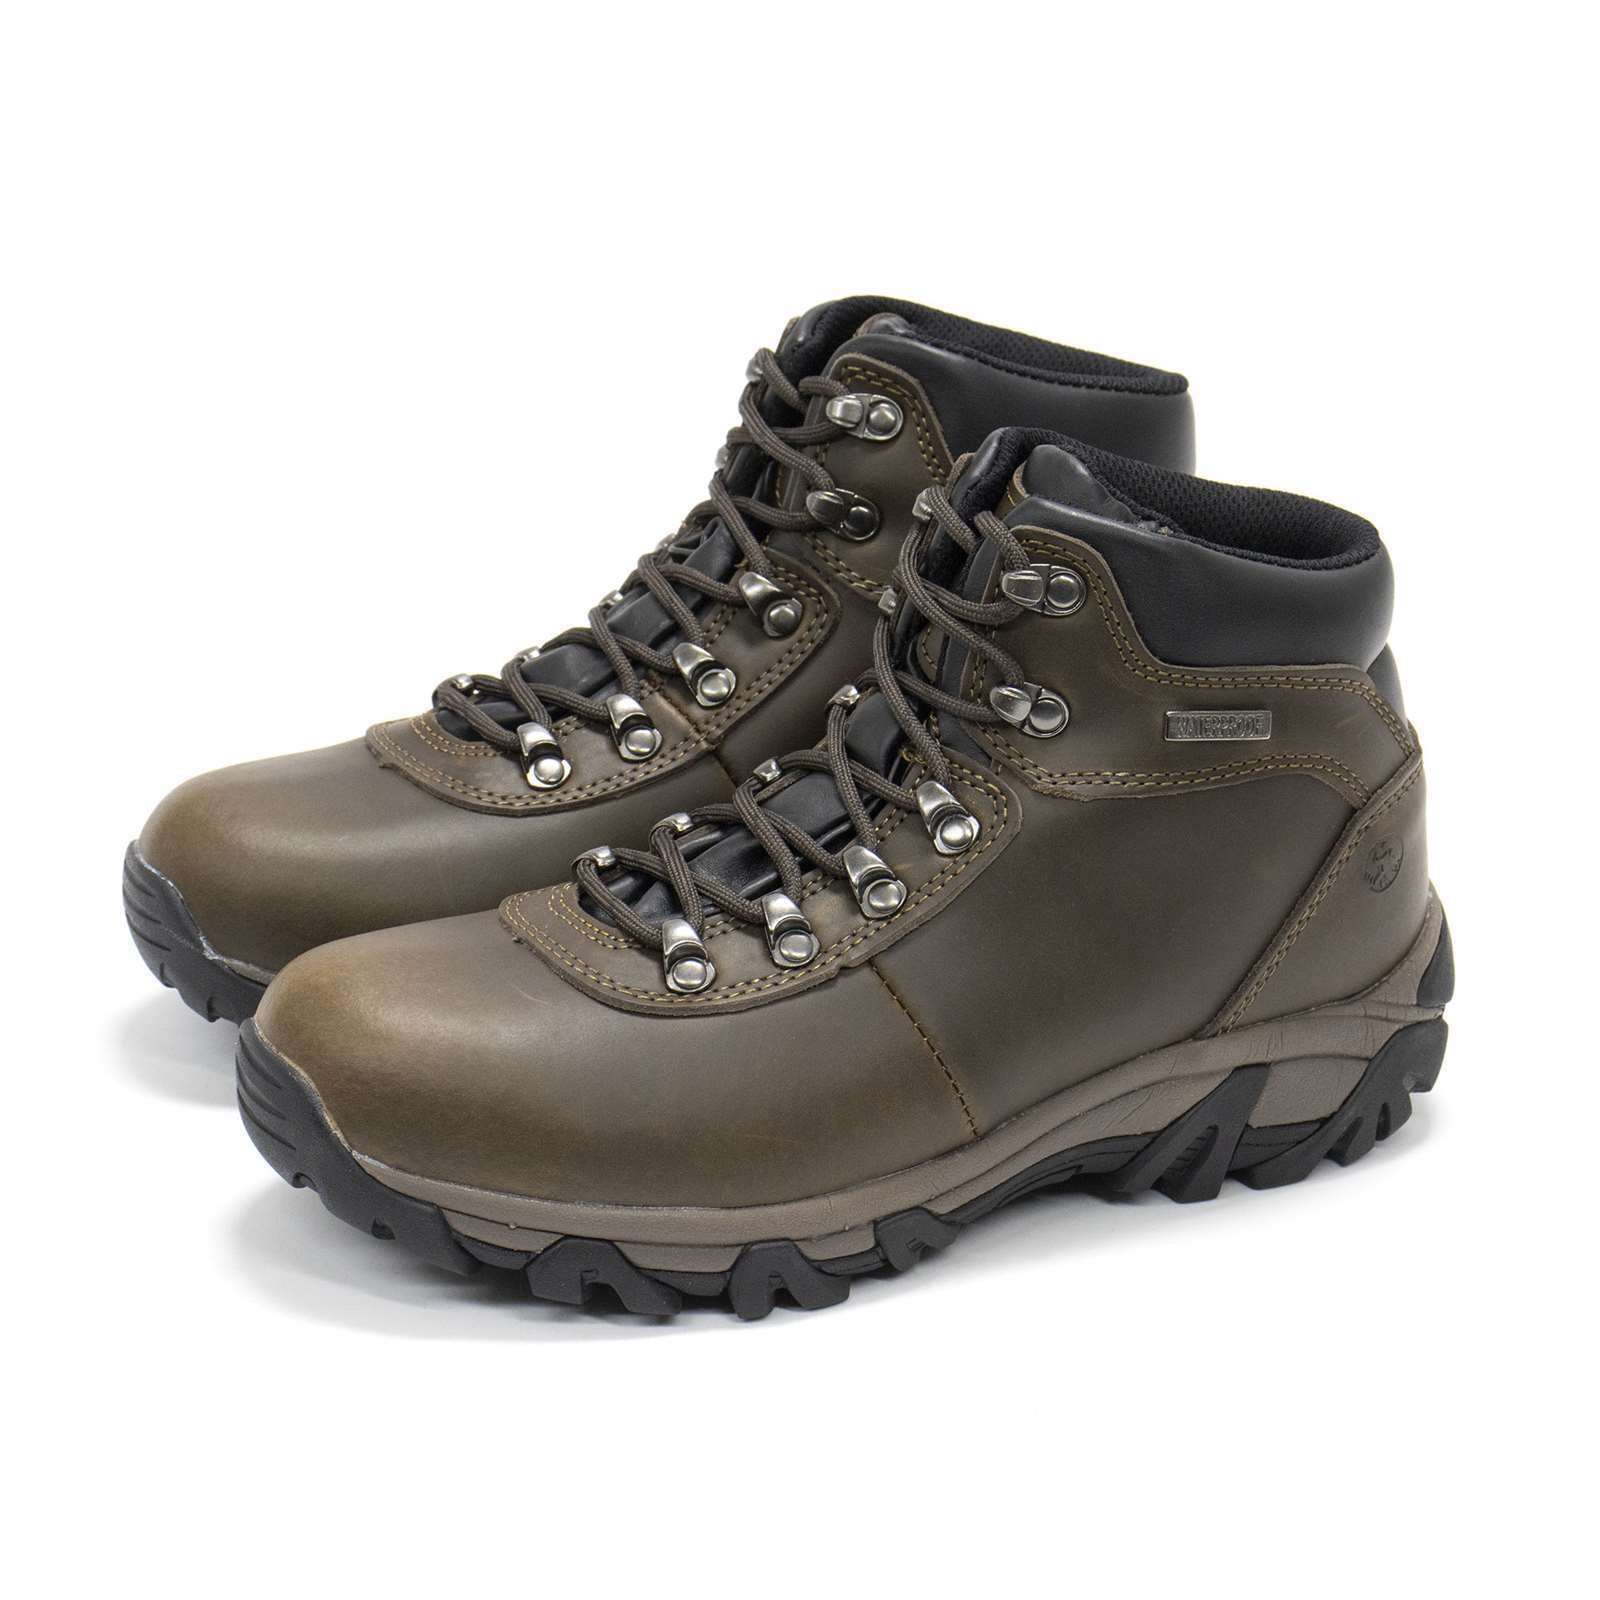 Northside Men Vista Ridge Mid Waterproof Hiking Boots